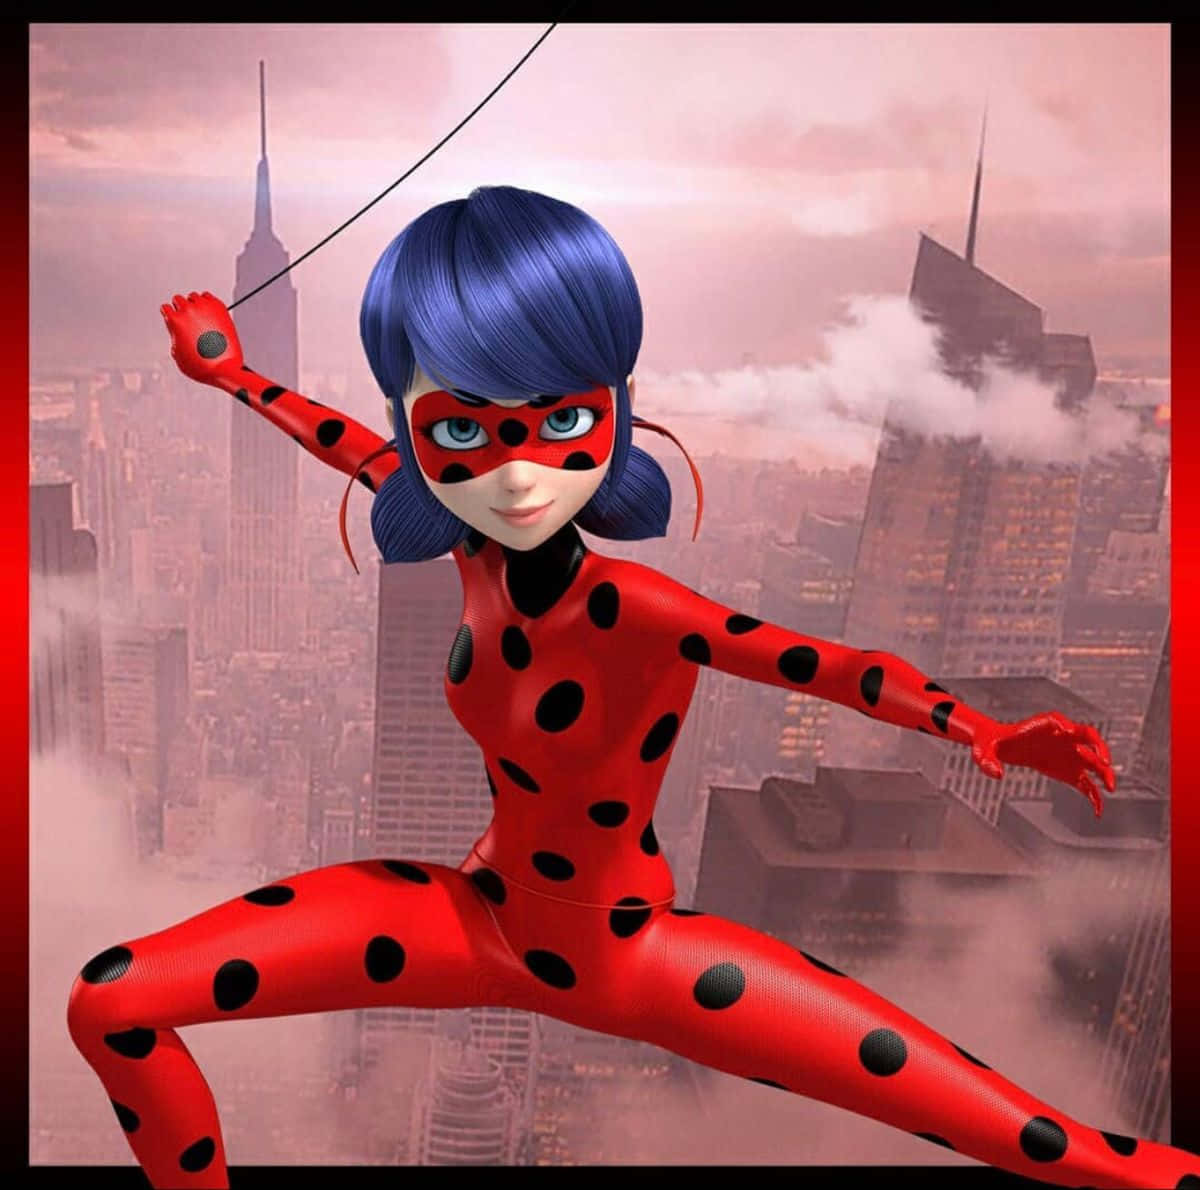 Feel empowered with the Miraculous Ladybug superheroes!